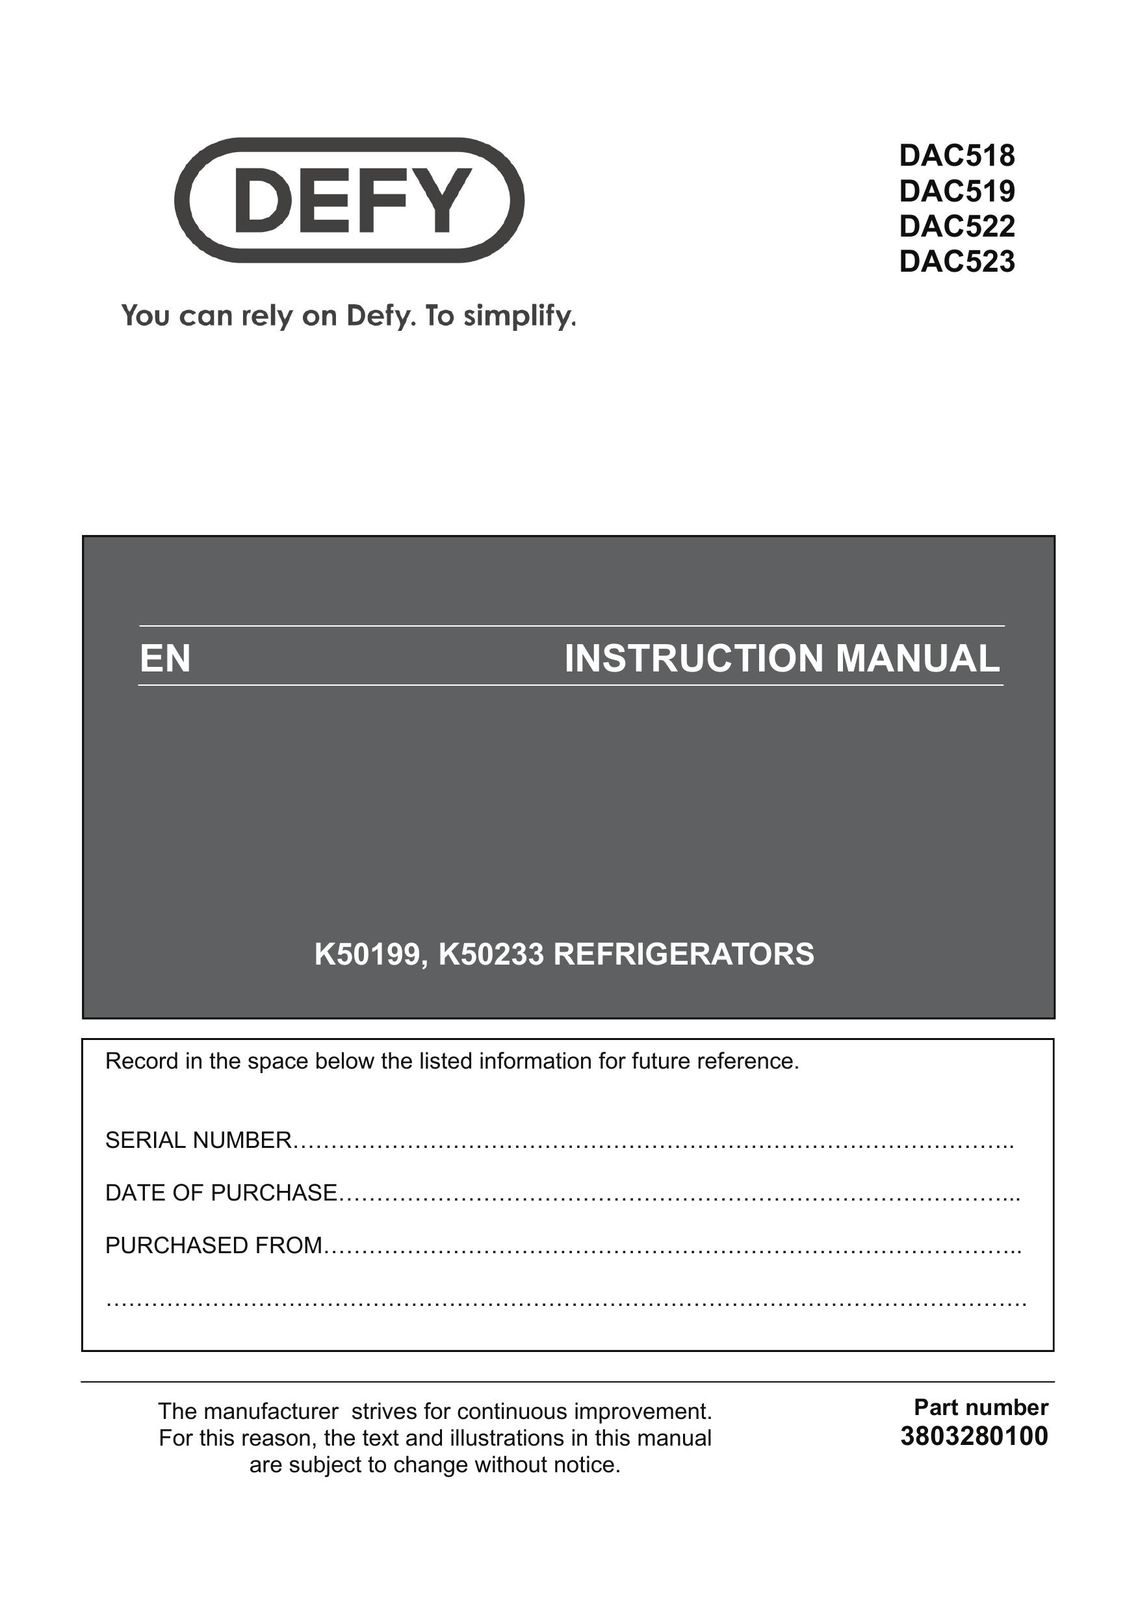 Defy Appliances DAC523 Freezer User Manual